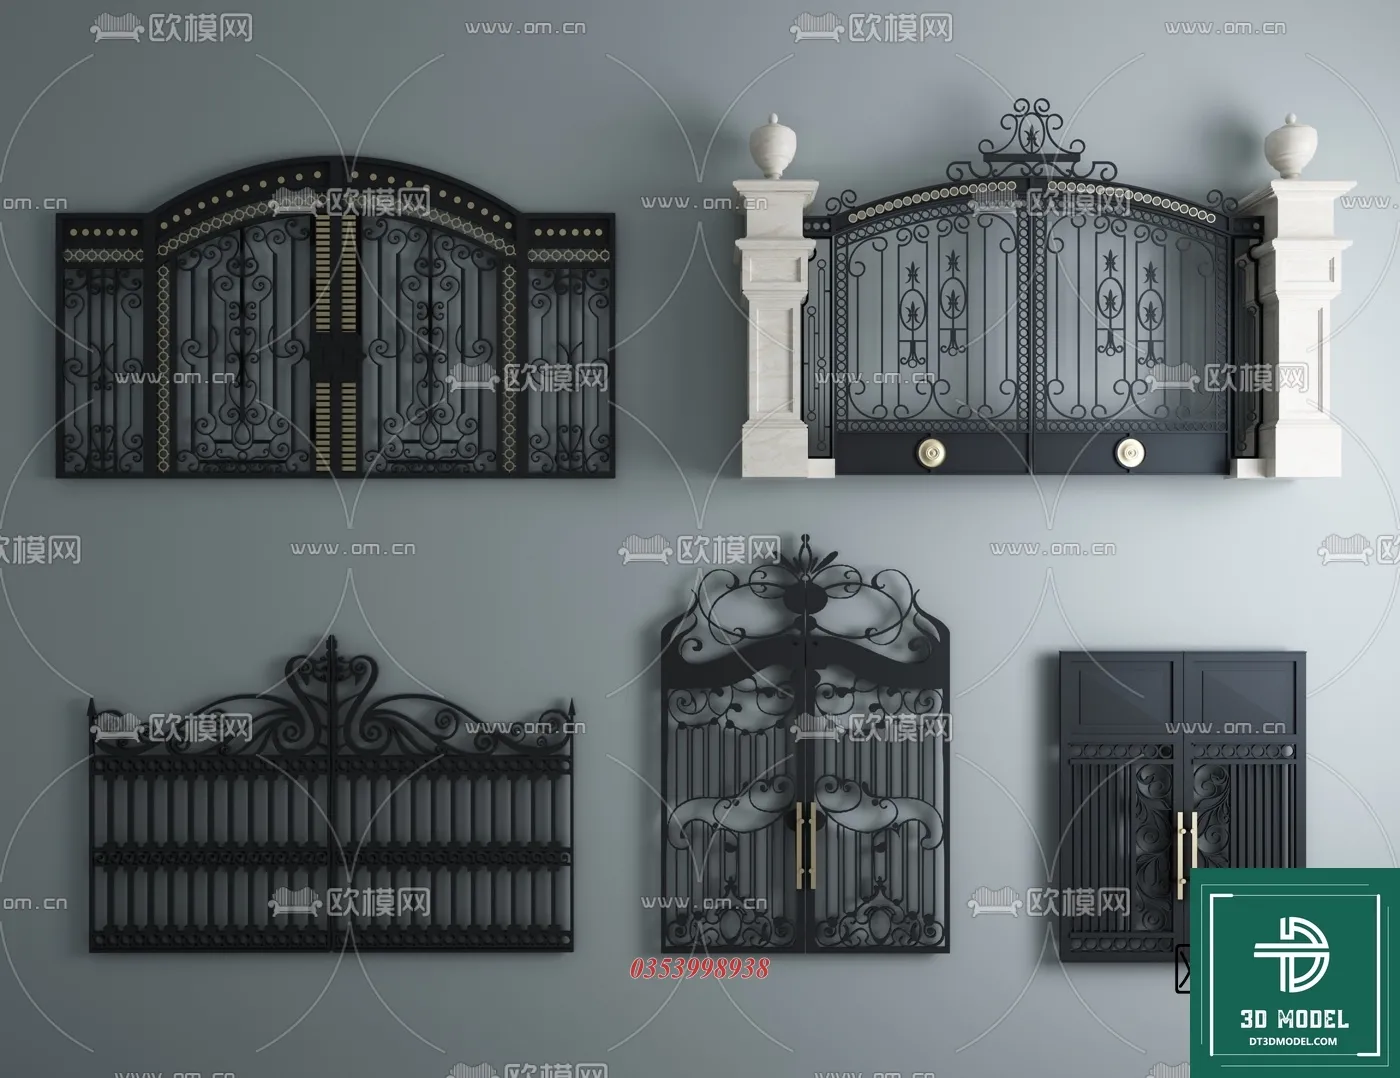 CLASSIC GATE – 3D MODELS – 021